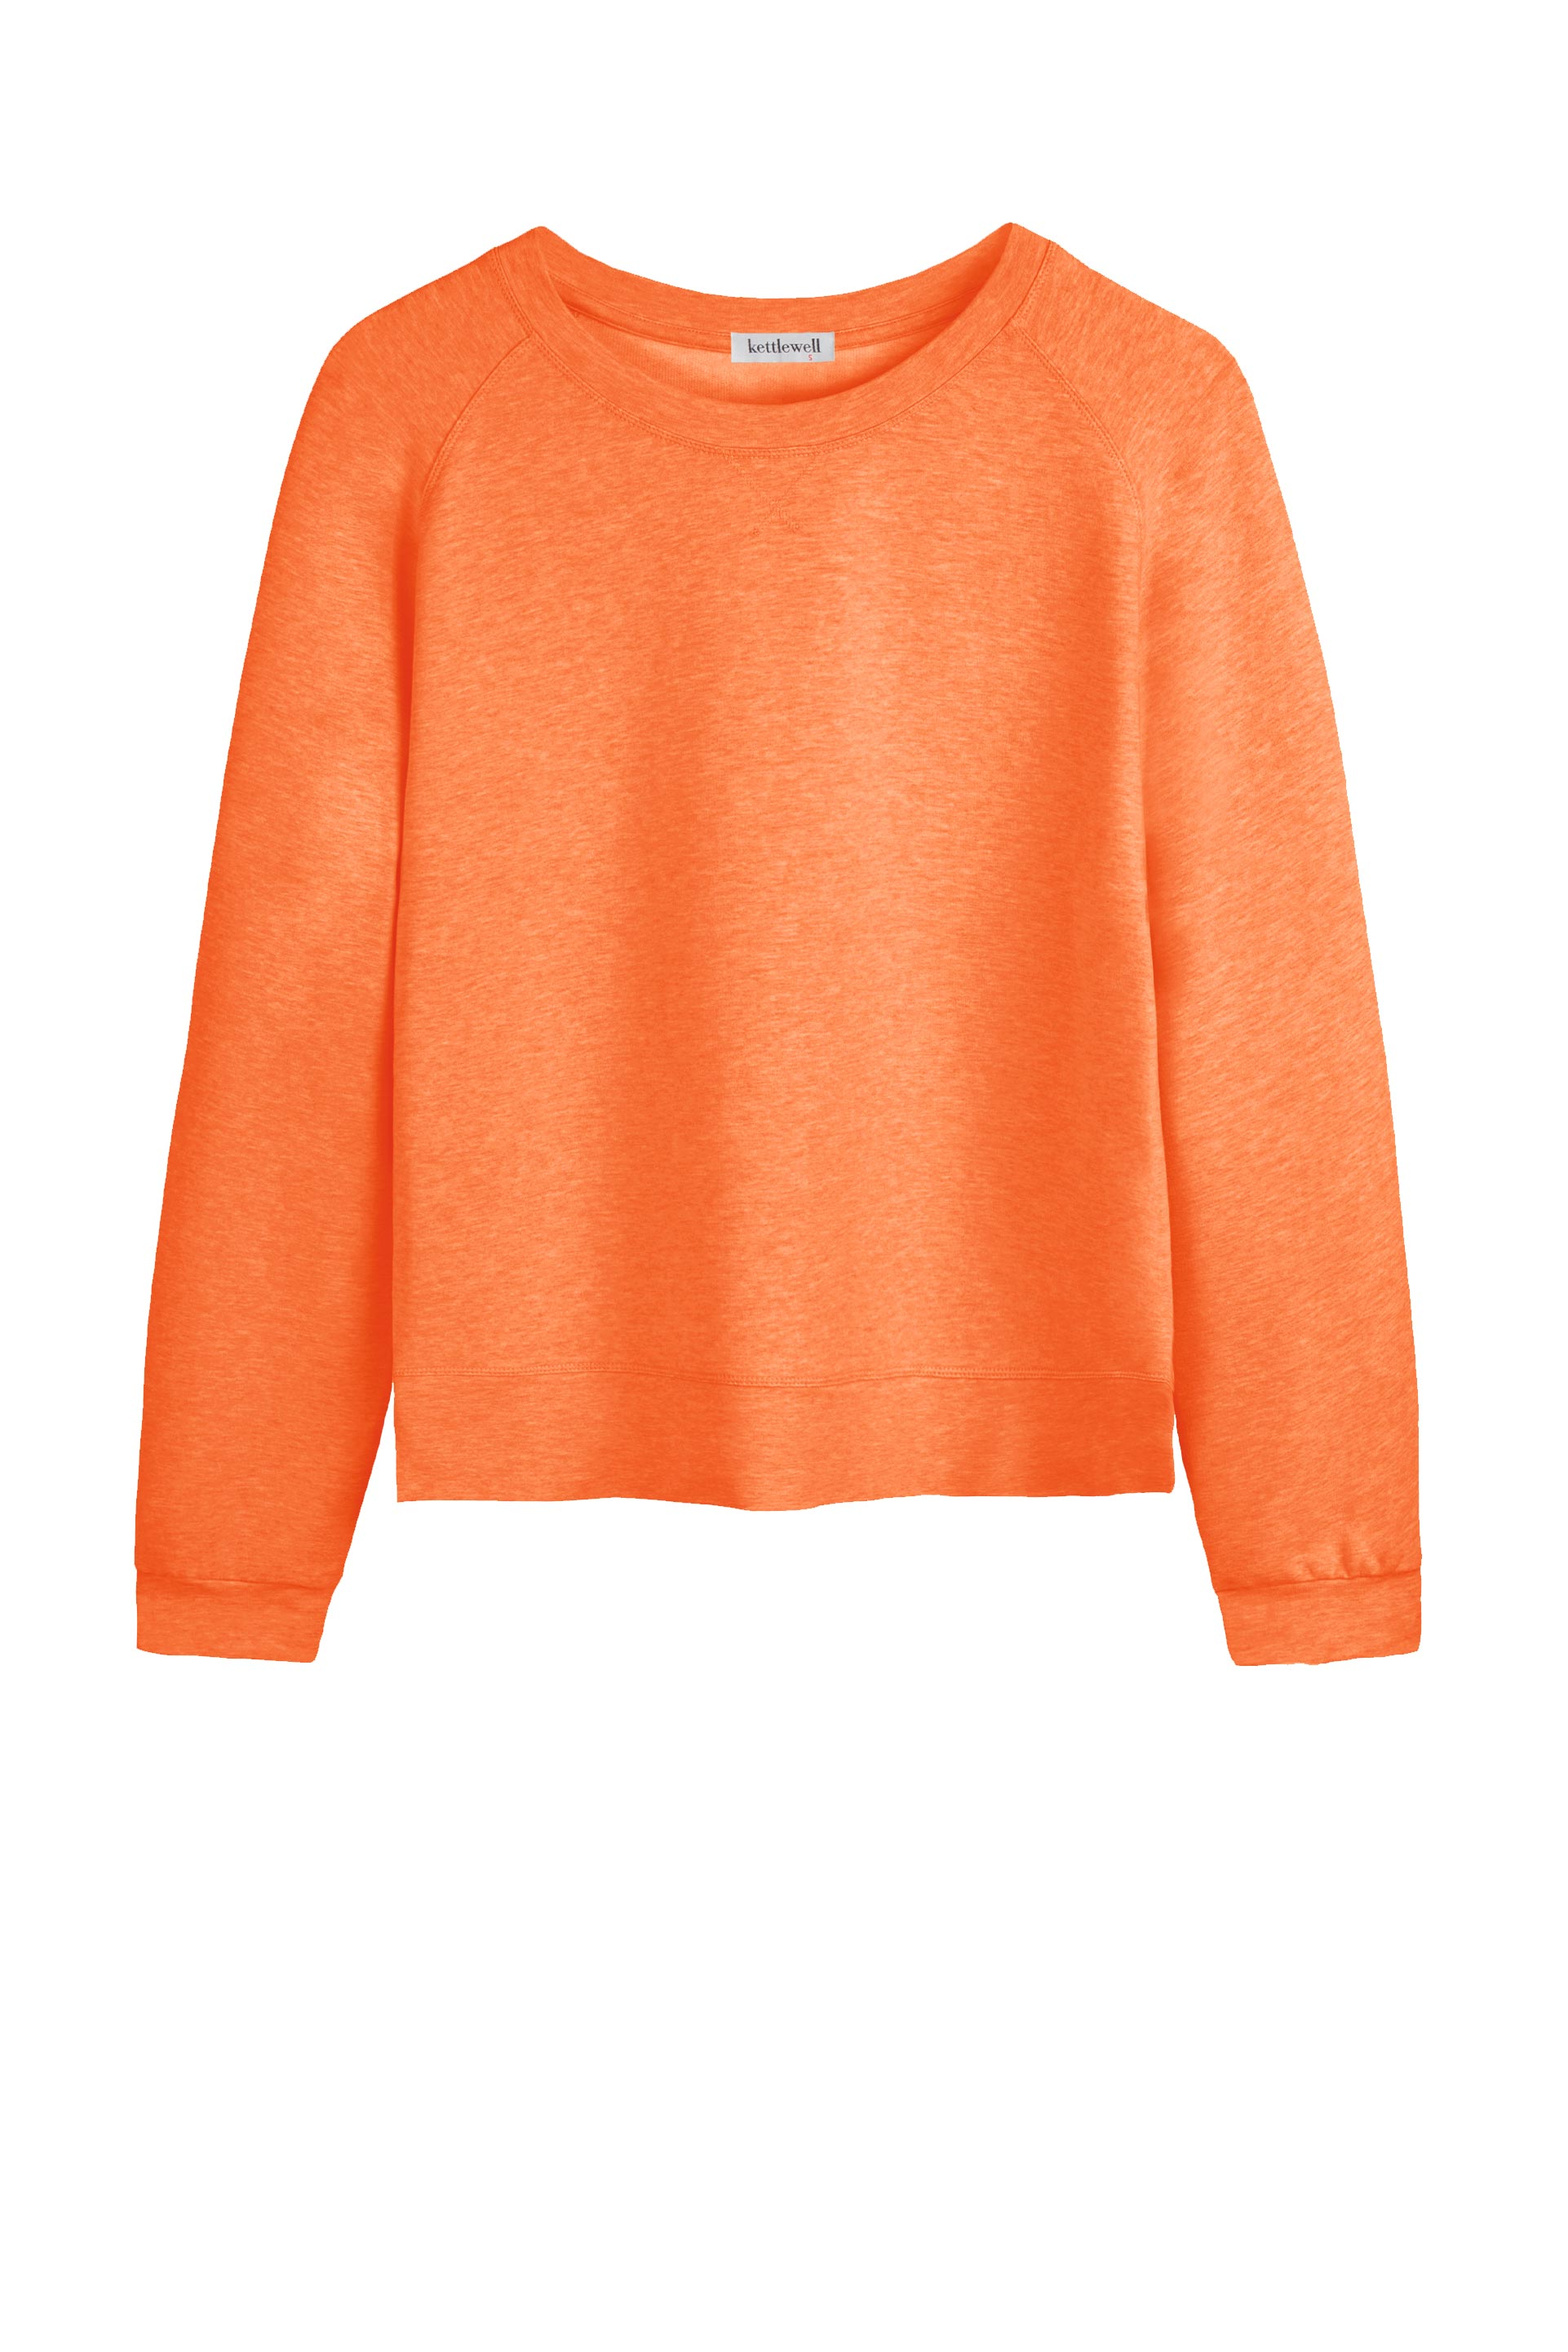 16003_supersoft_sweater_tangerine.jpg